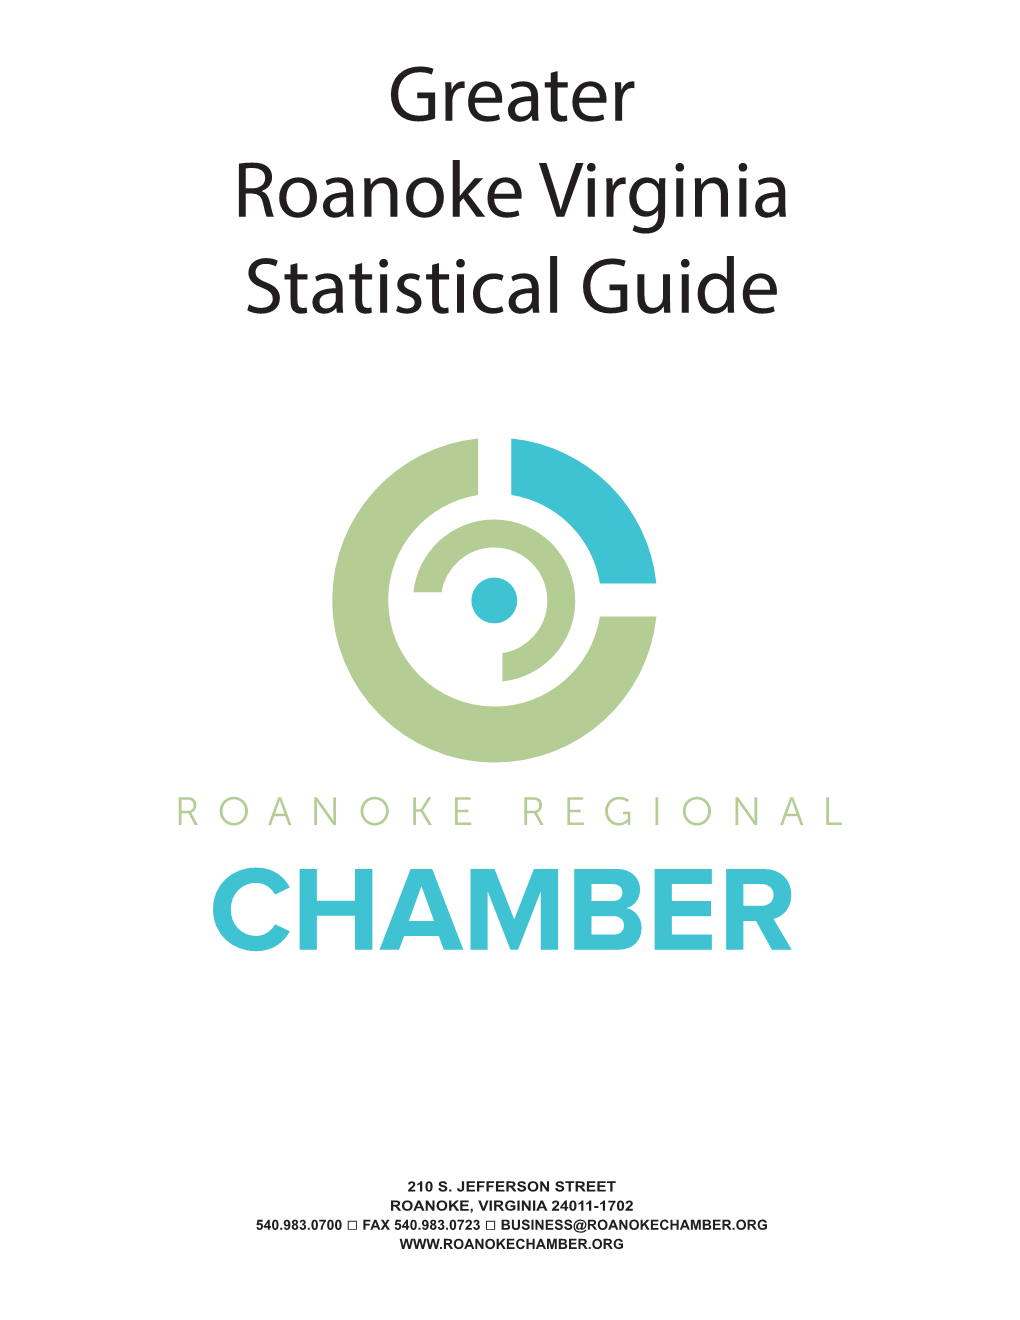 Greater Roanoke Virginia Statistical Guide